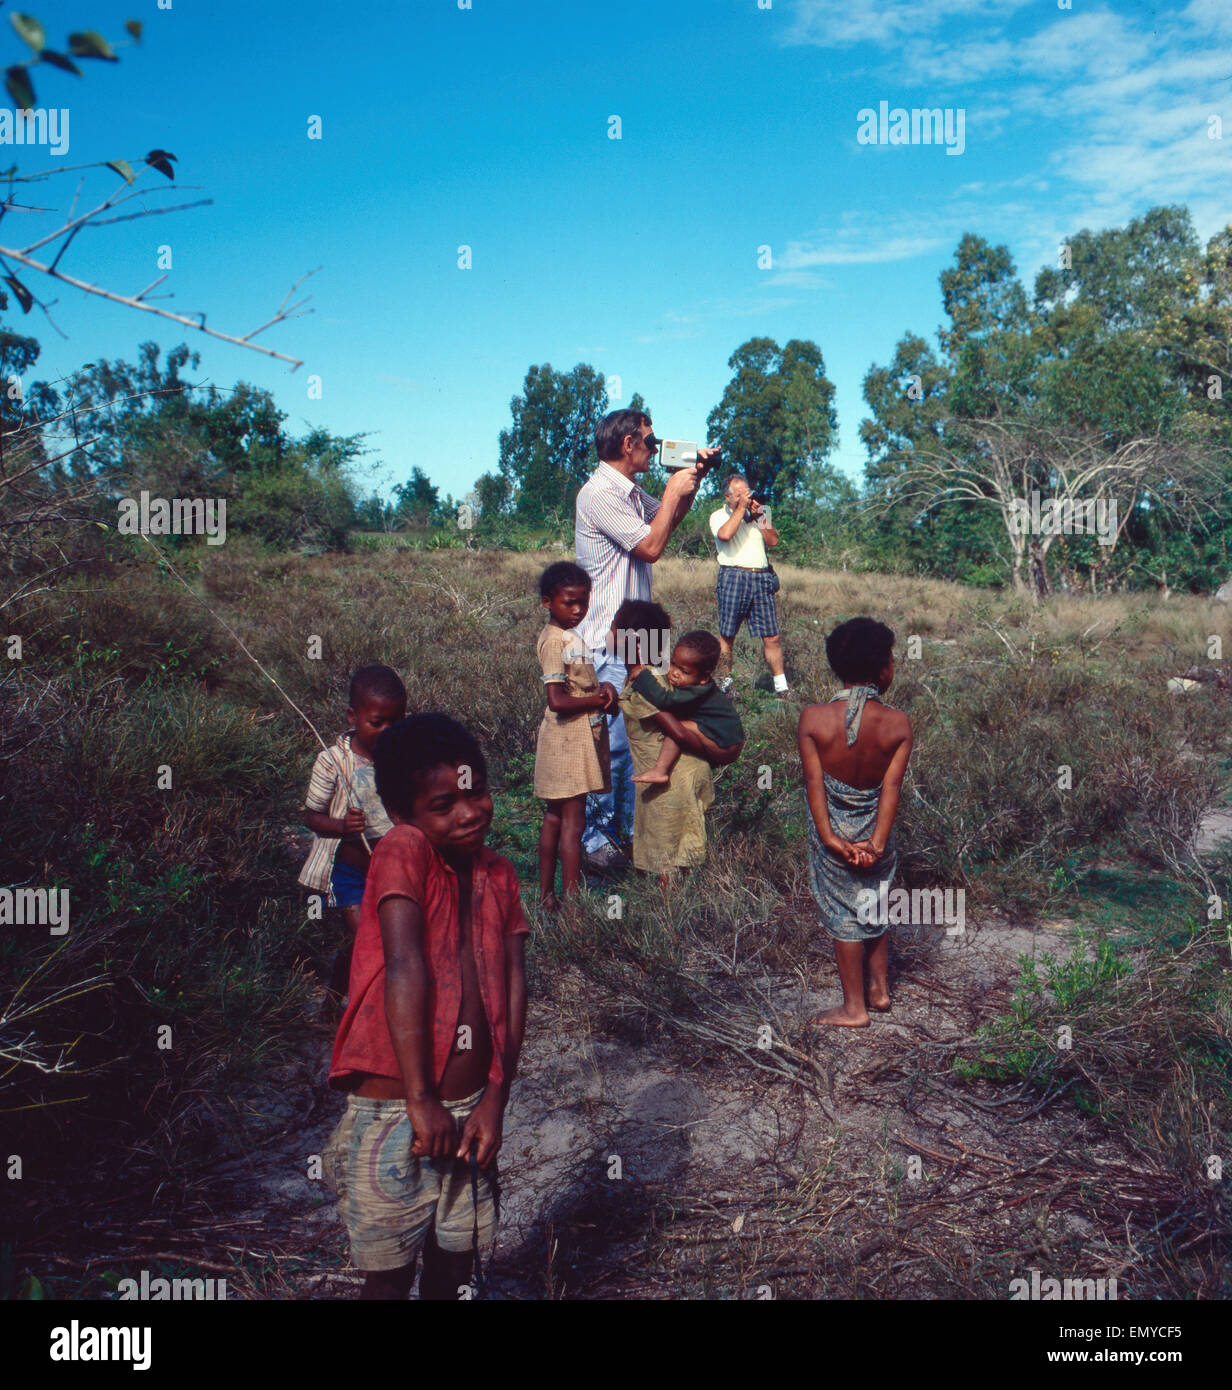 Eine Reise nach Madagaskar, 1980er Jahre. A trip to Madagaskar, 1980s. Stock Photo